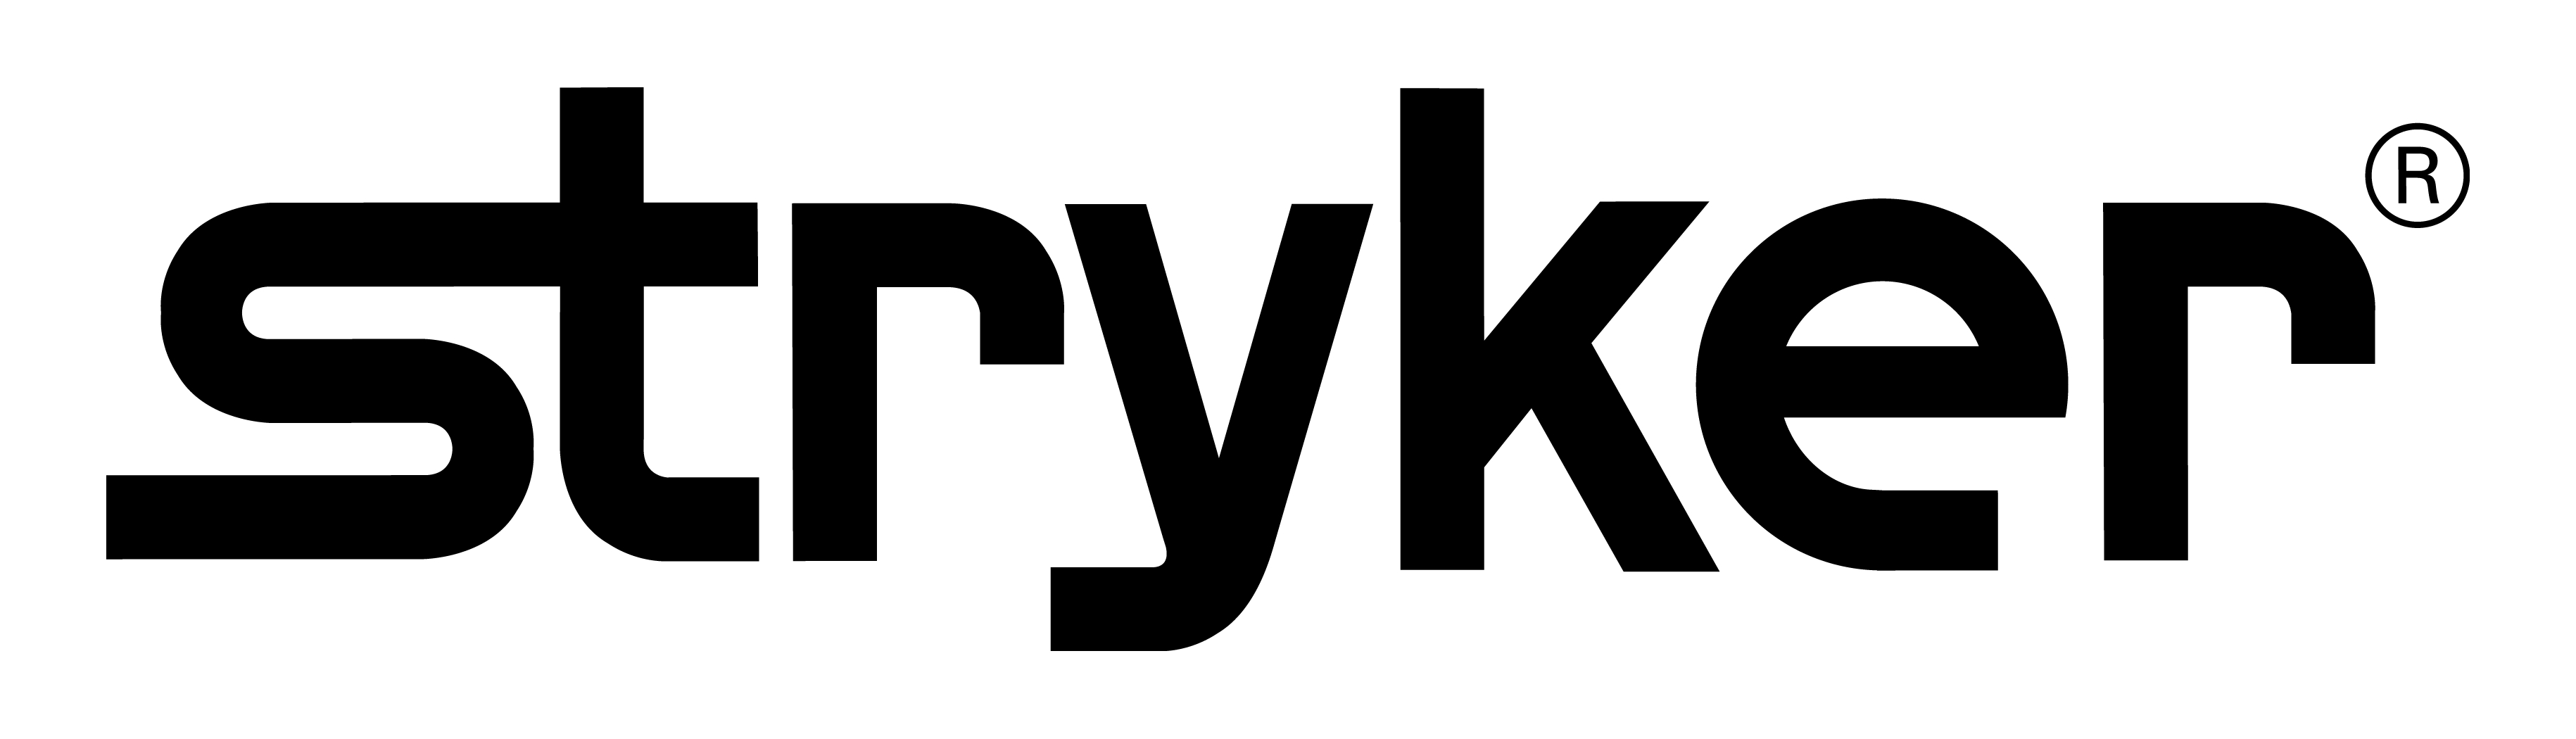 Stryker Logo PNG Image